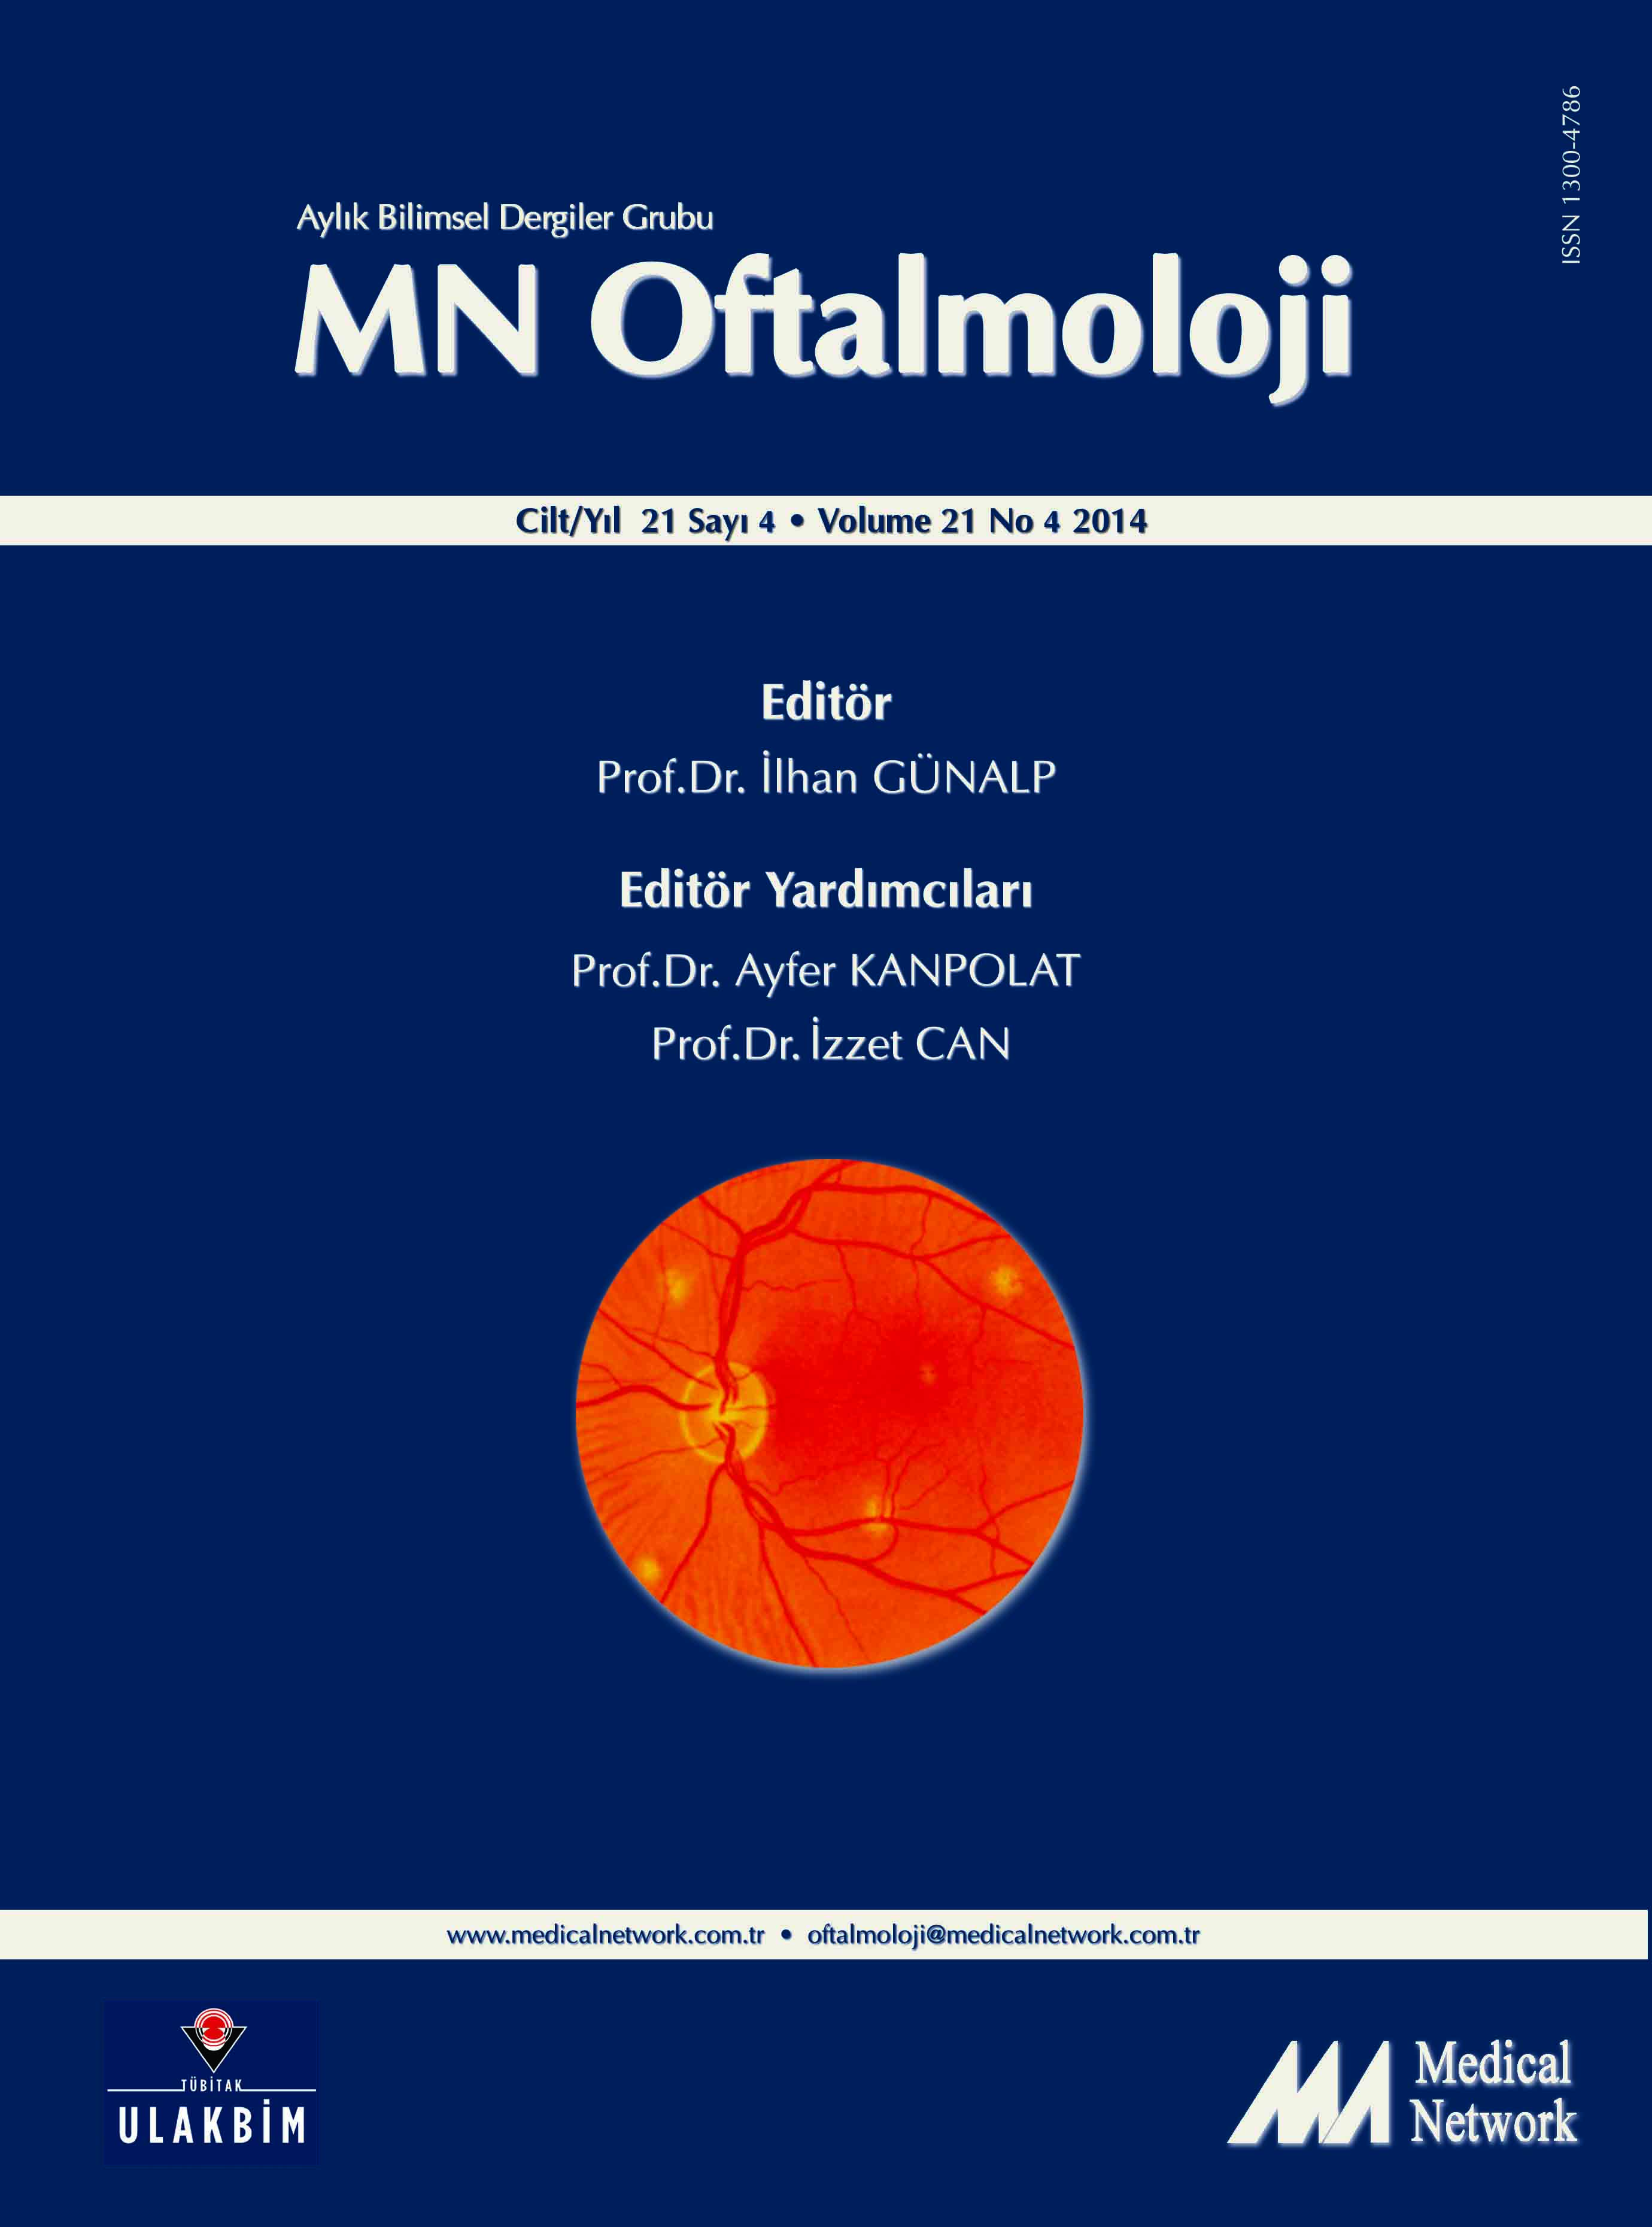 <p>MN Oftalmoloji Cilt: 21 Say: 4 2014 (MN Ophthalmology Volume: 21 No 4 2014)</p>